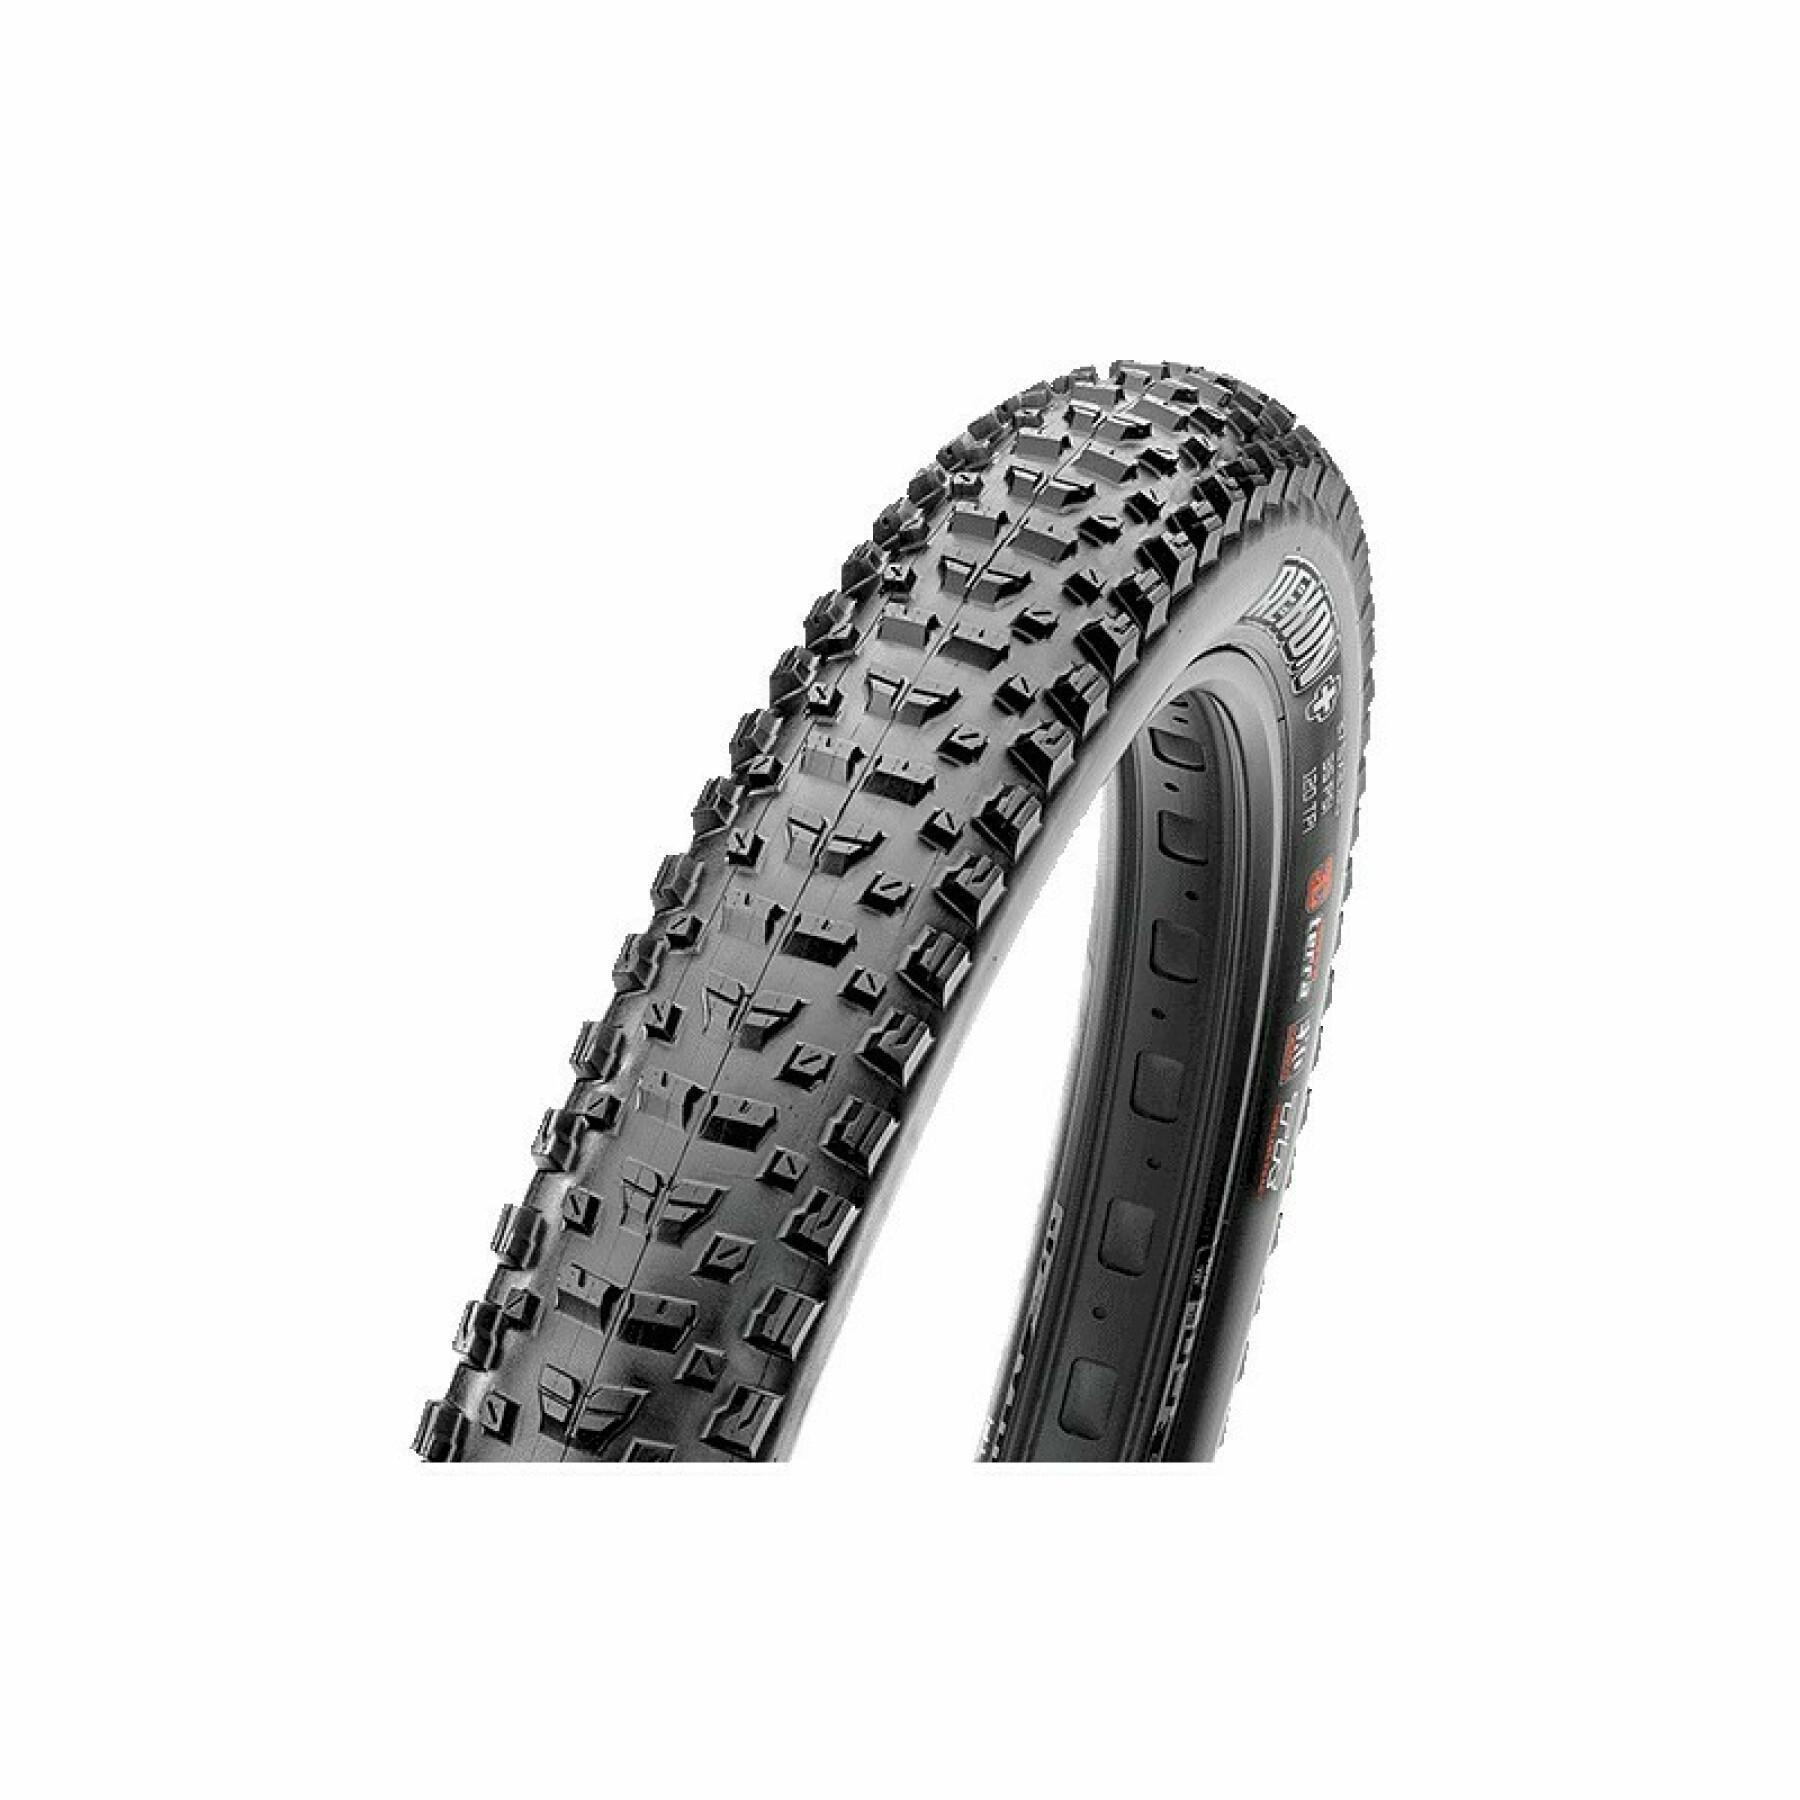 Soft tire Maxxis Rekon+ 27.5x2.80 3c Terra / Exo / Tubeless Ready